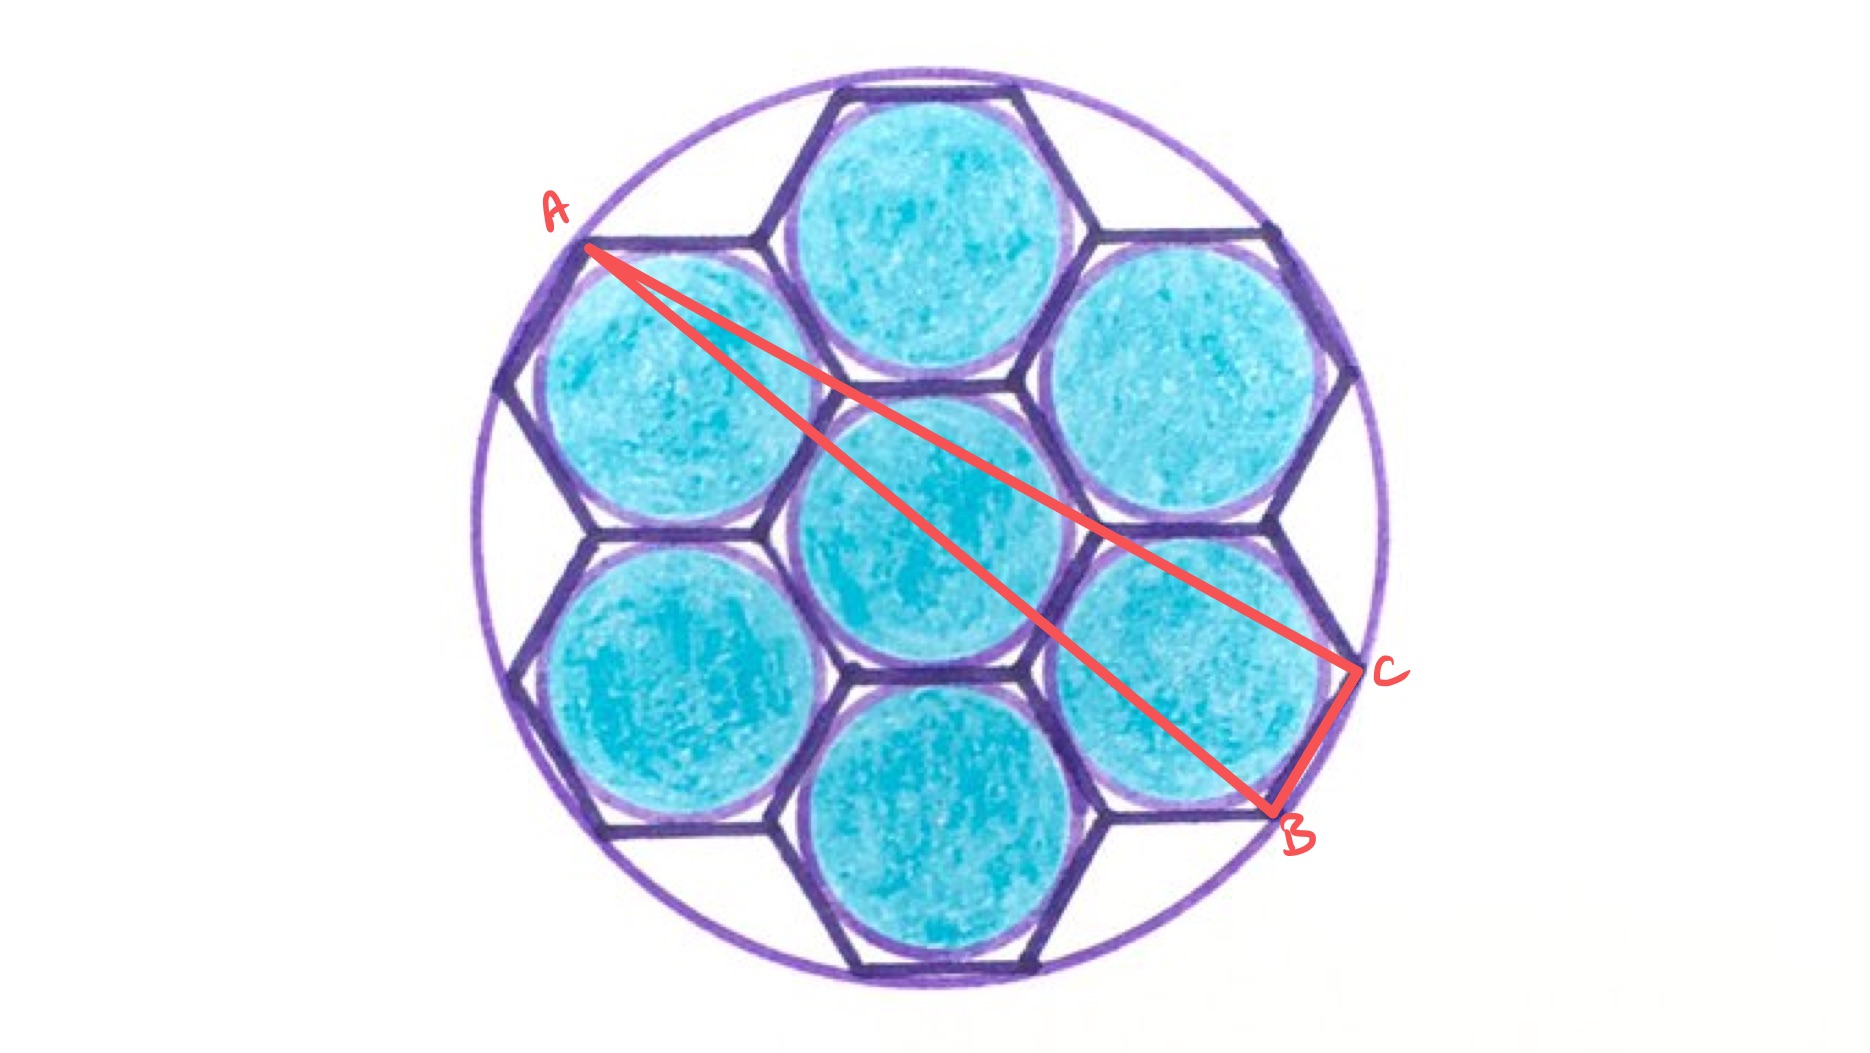 Seven hexagons labelled